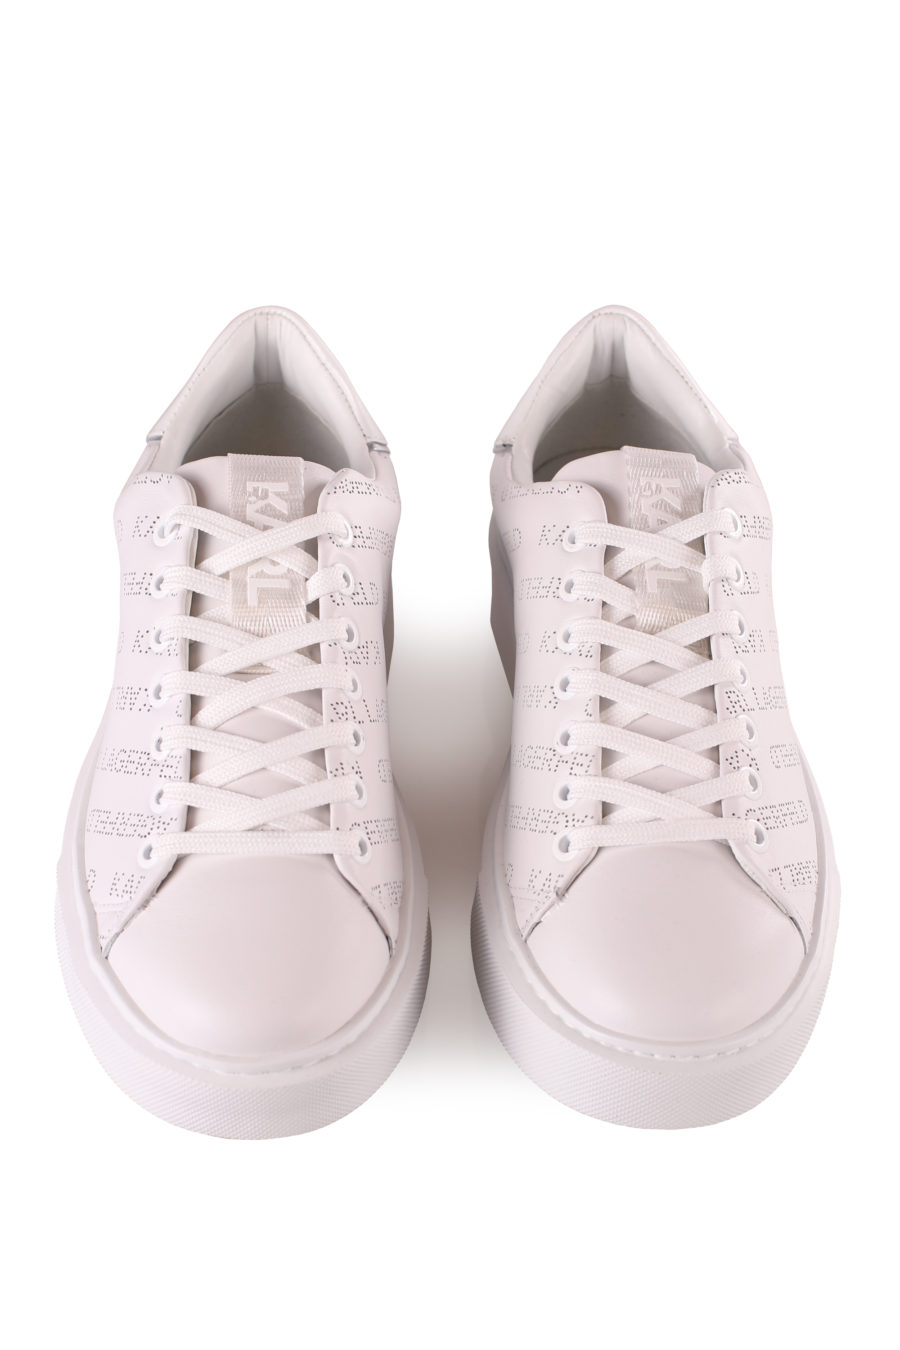 Zapatillas blancas "Maxi Kup" perf logo - IMG 4572 2